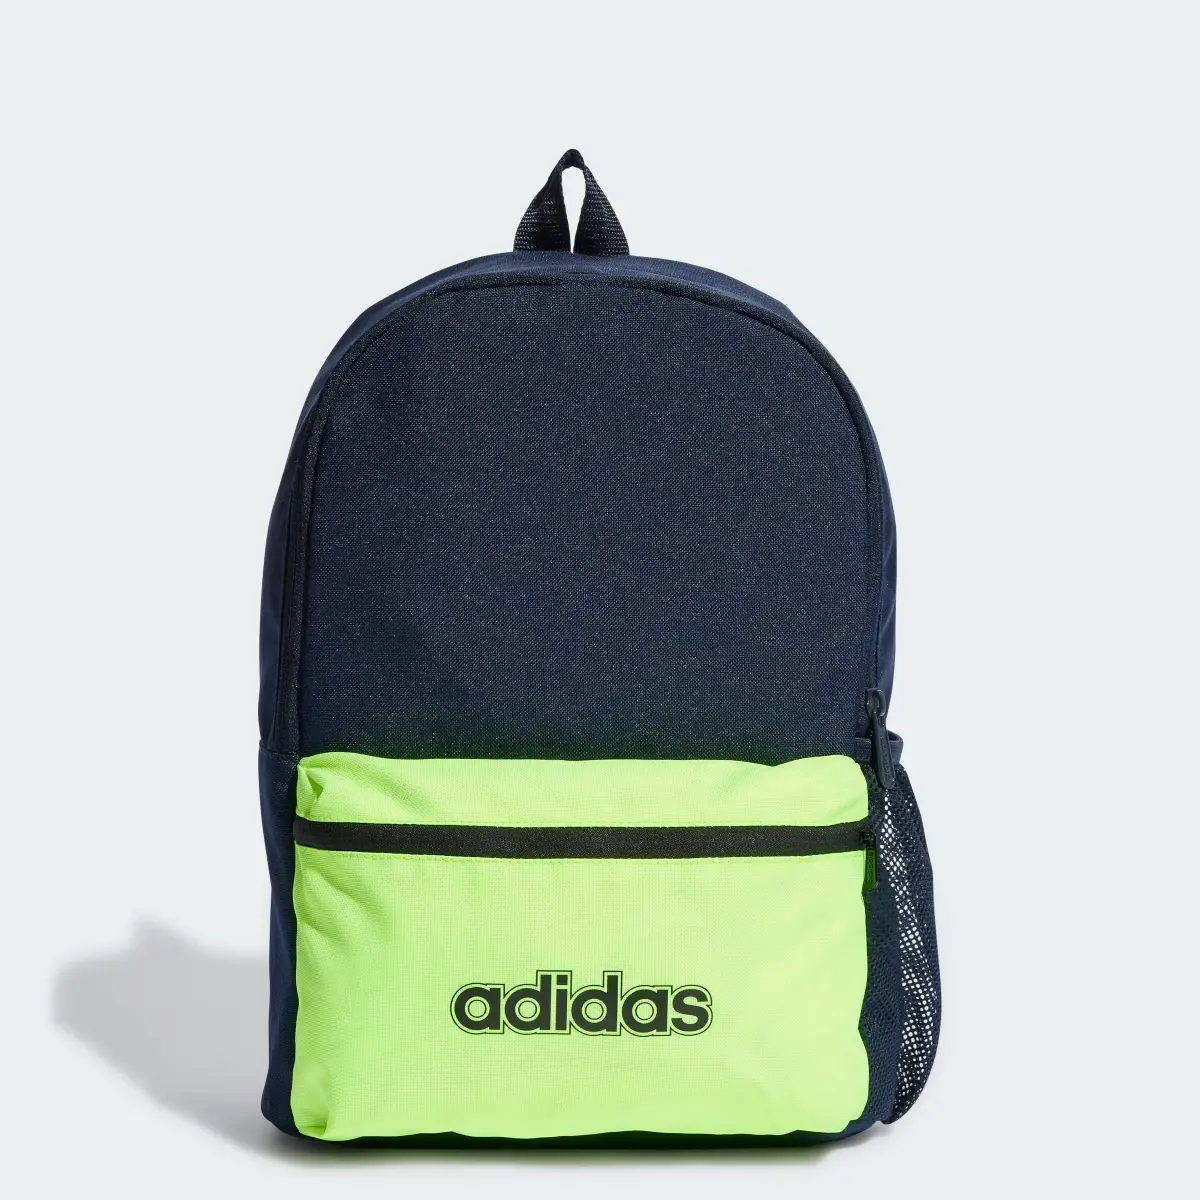 Adidas Graphic Rucksack. 1